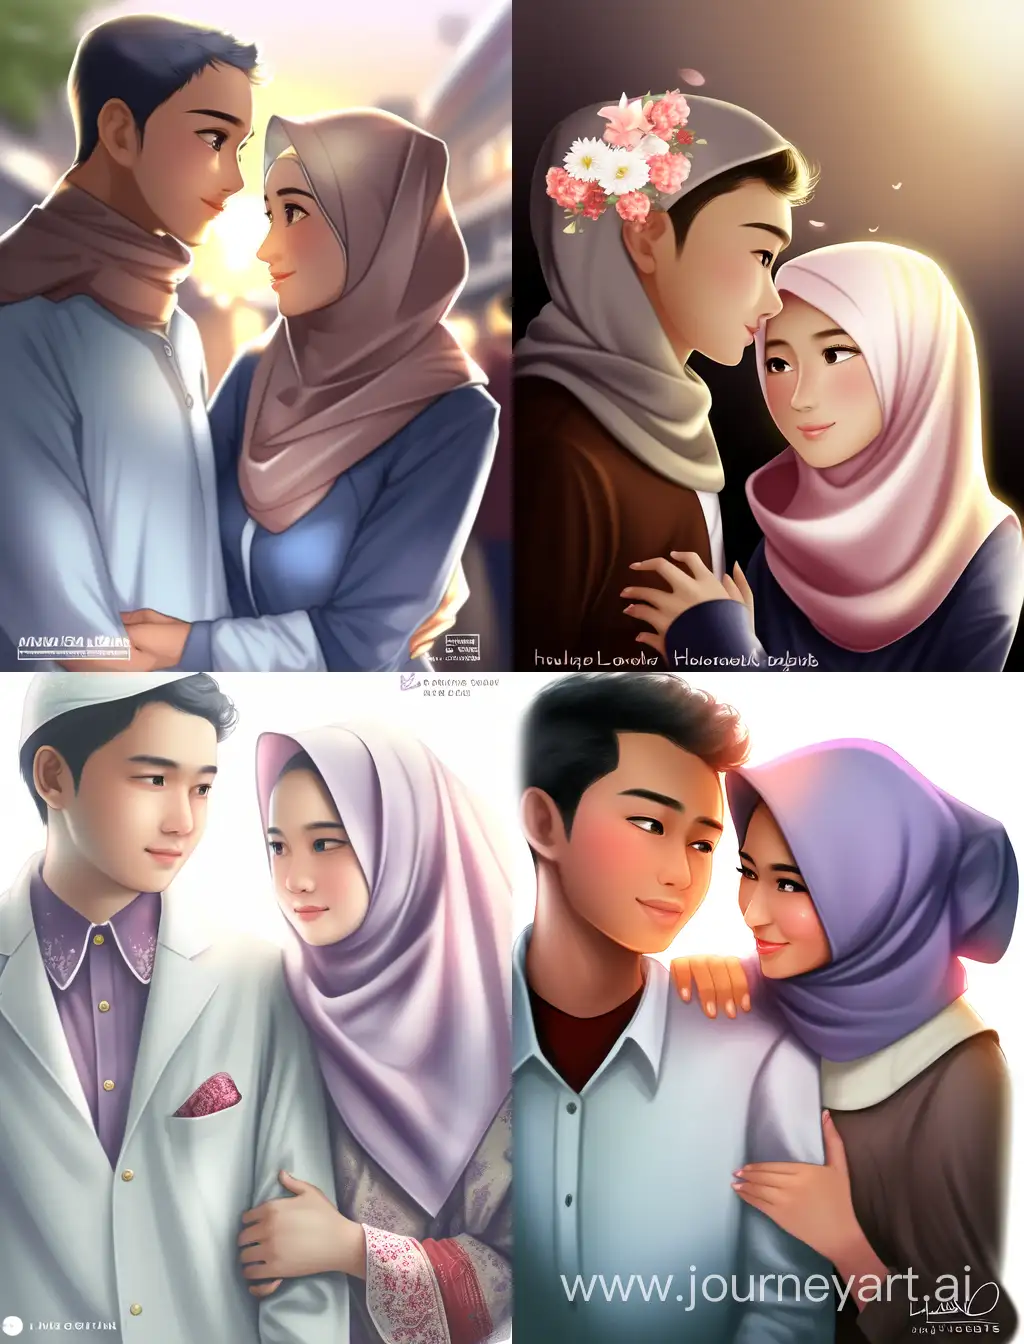 Indonesian-Muslim-Couple-in-Traditional-Attire